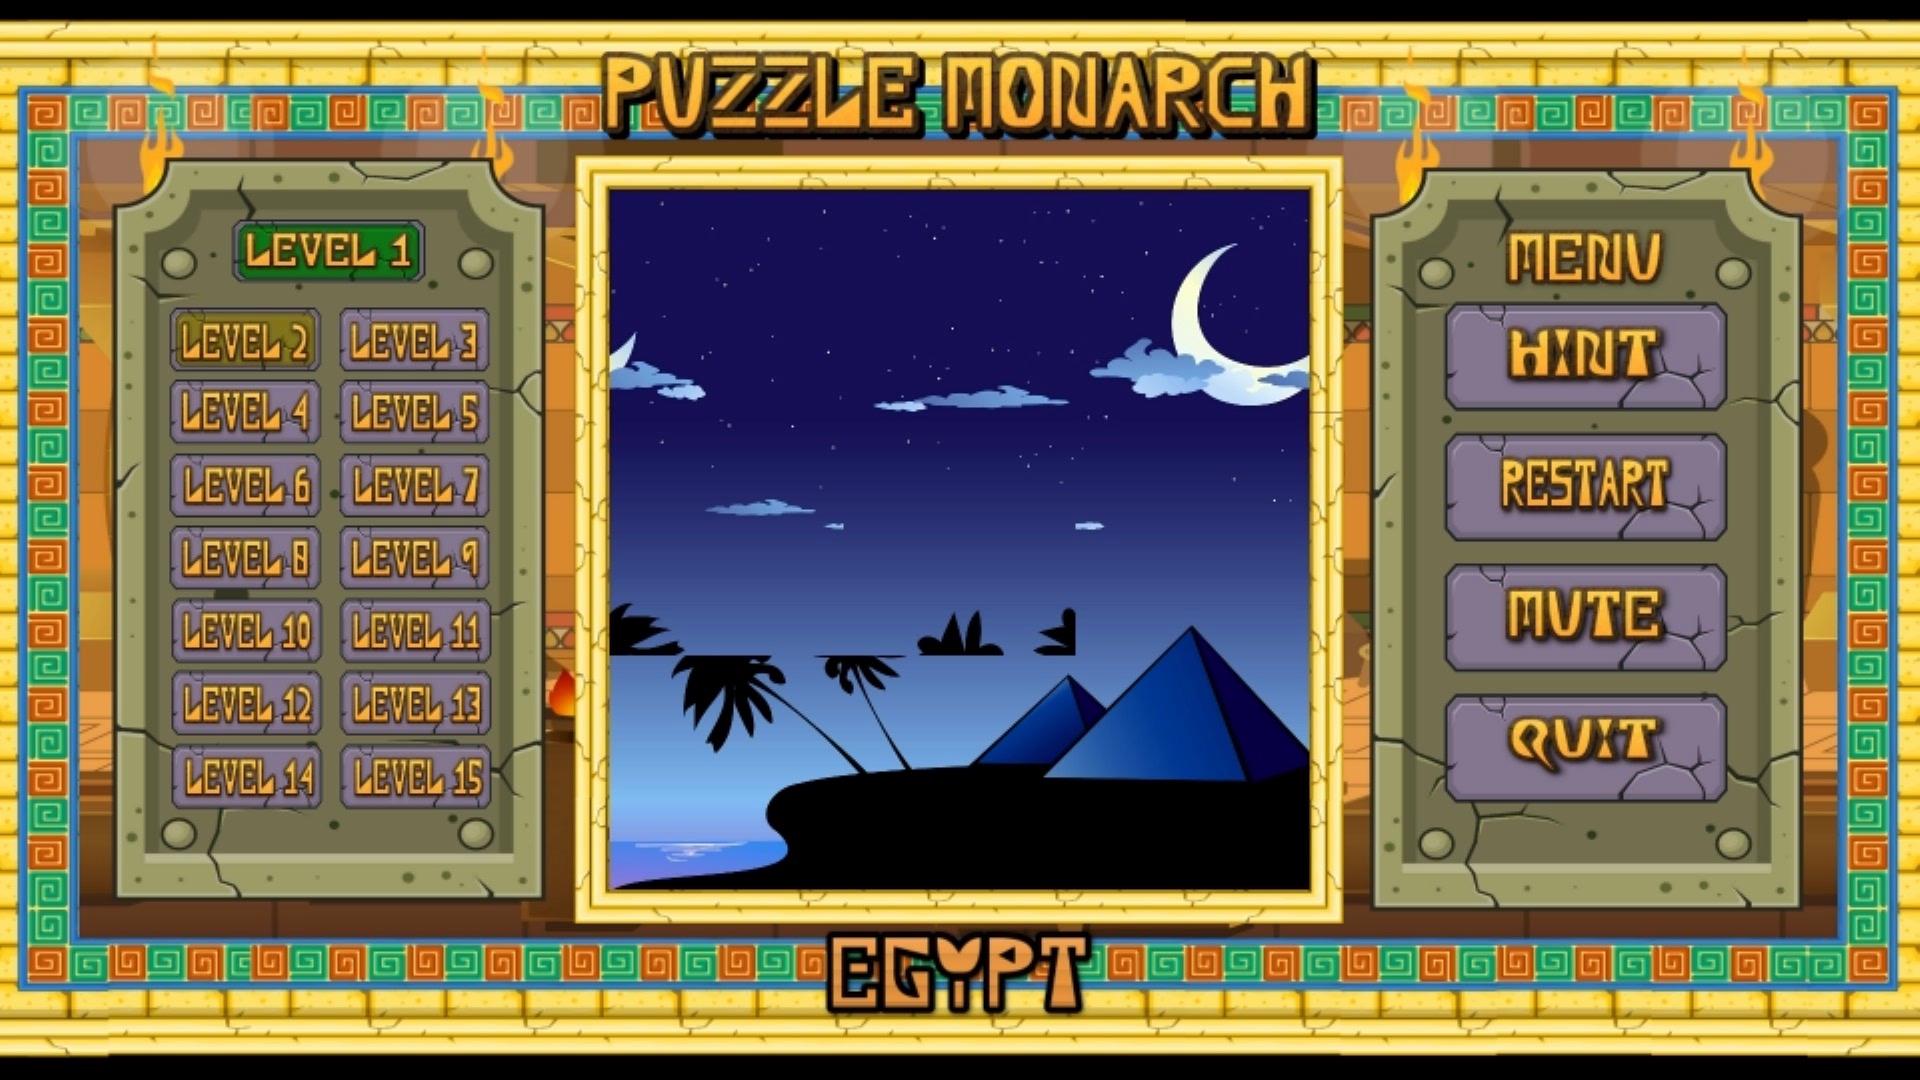 [$ 5.65] Puzzle Monarch: Egypt Steam CD Key